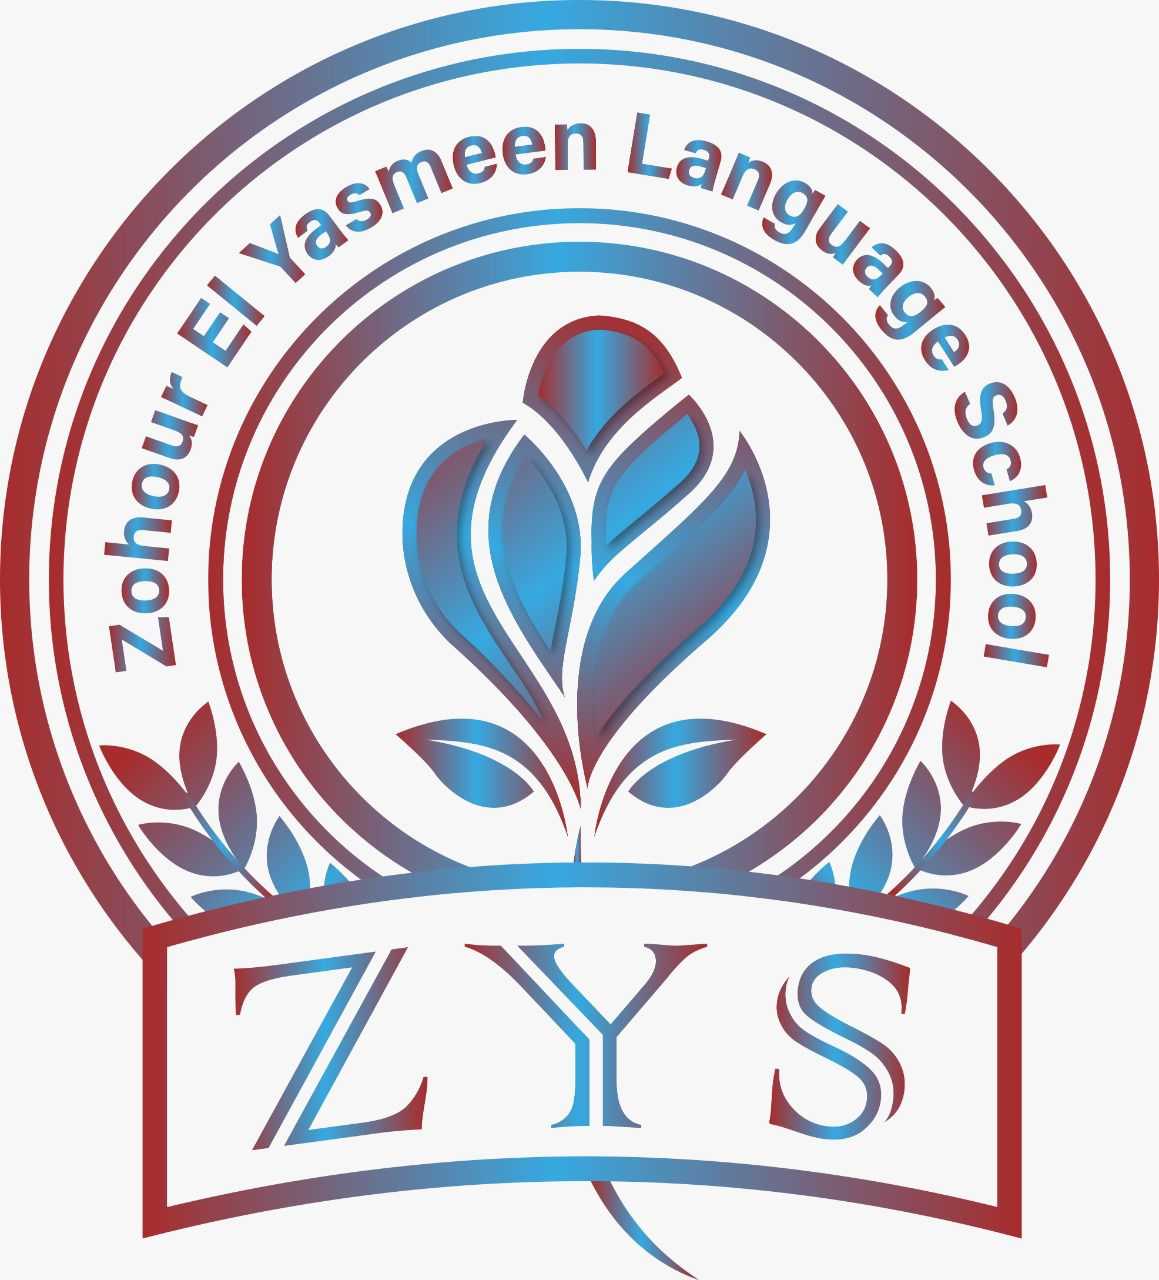 Zohour el Yasmeen language school ( Zys )